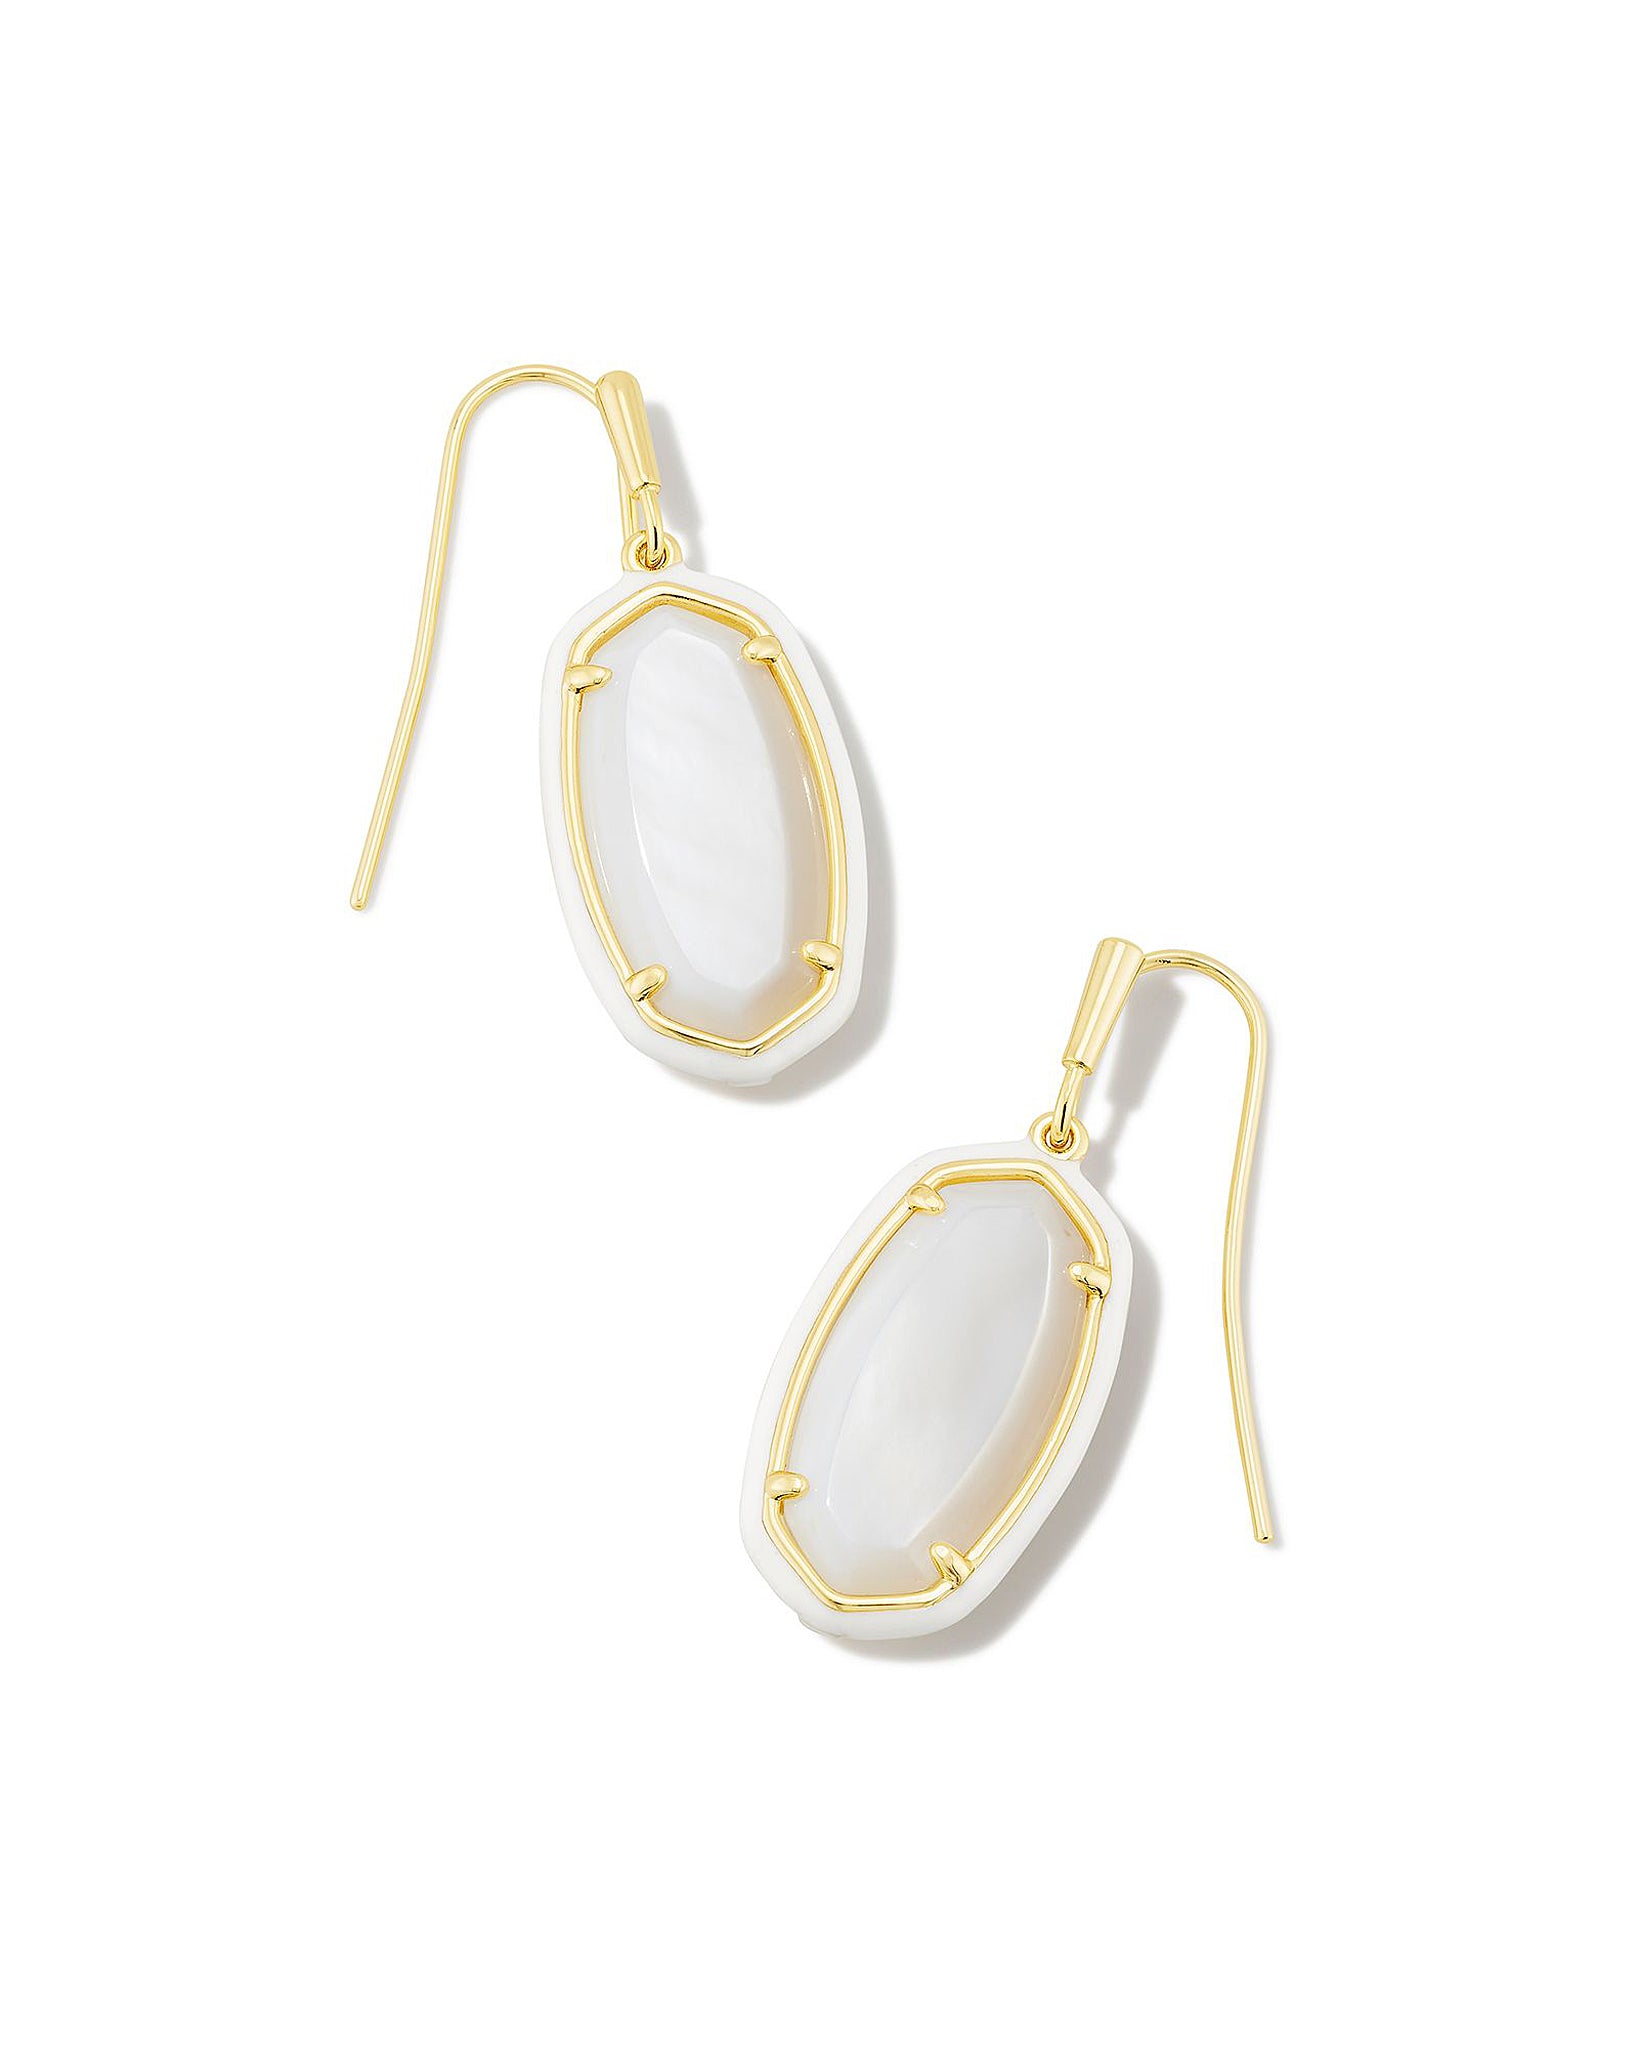 Kendra Scott Enamel Framed Dani Oval Dangle Earrings in White Mother of Pearl and Gold